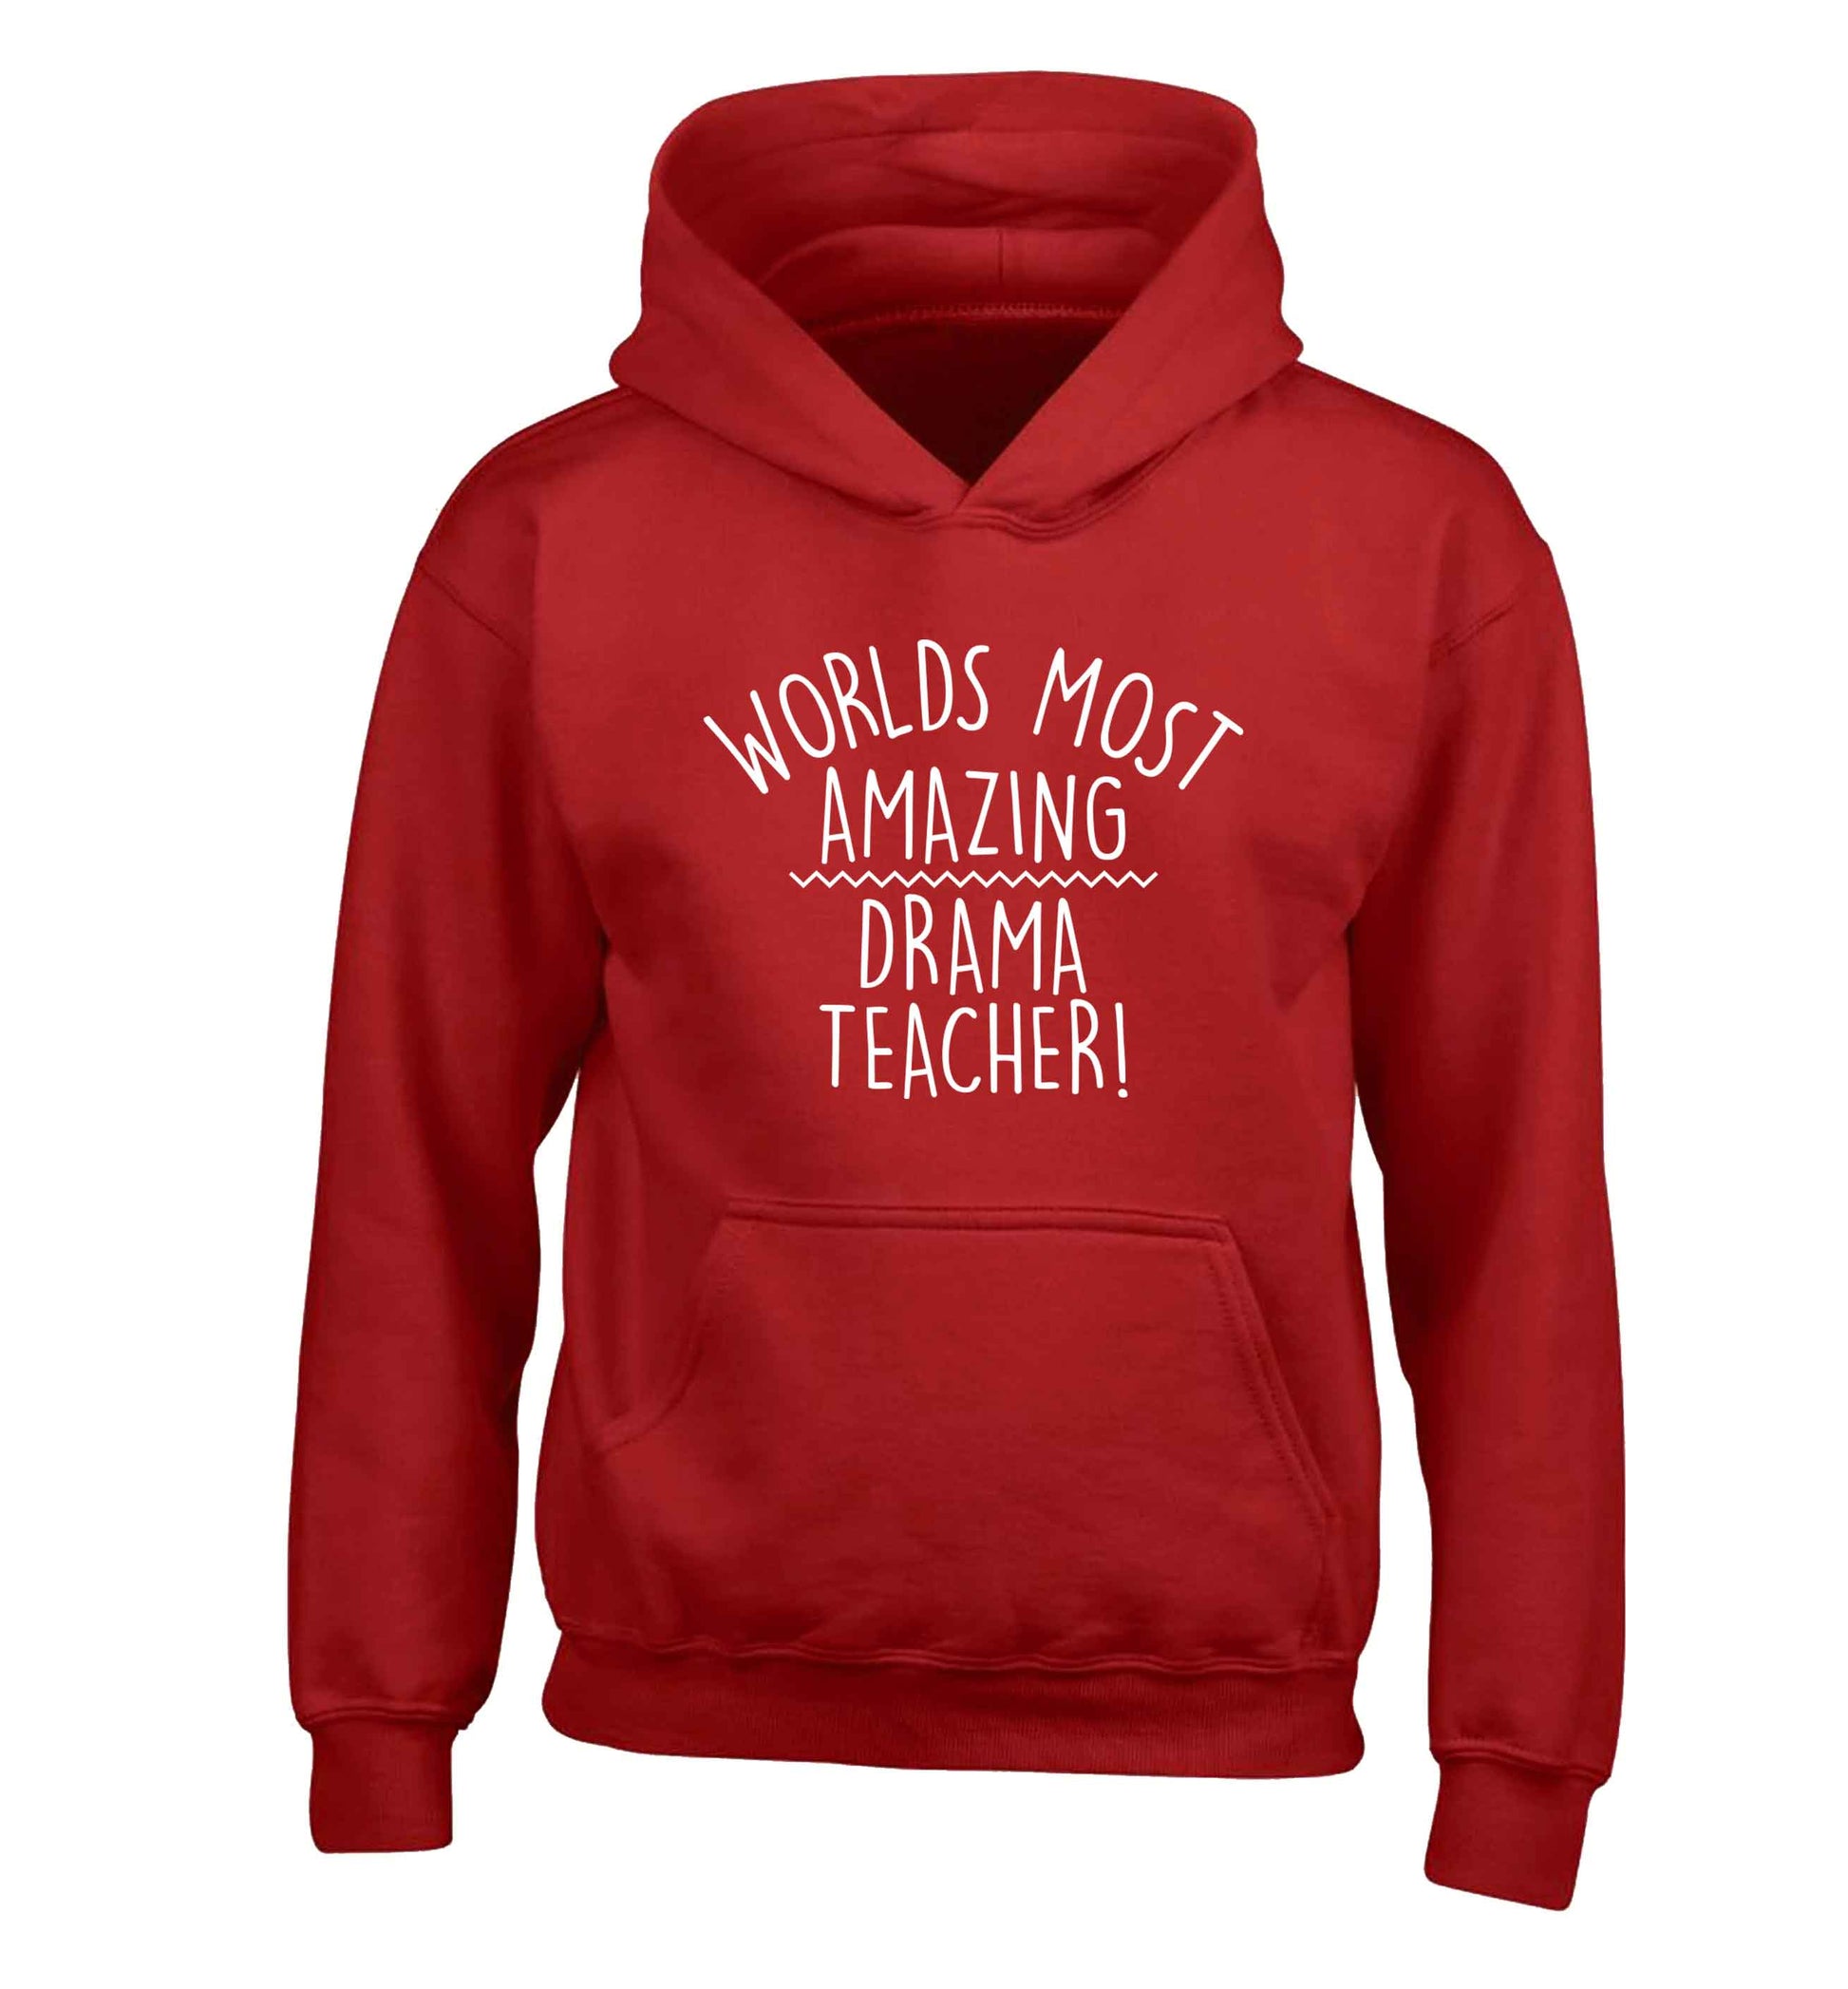 Worlds most amazing drama teacher children's red hoodie 12-13 Years